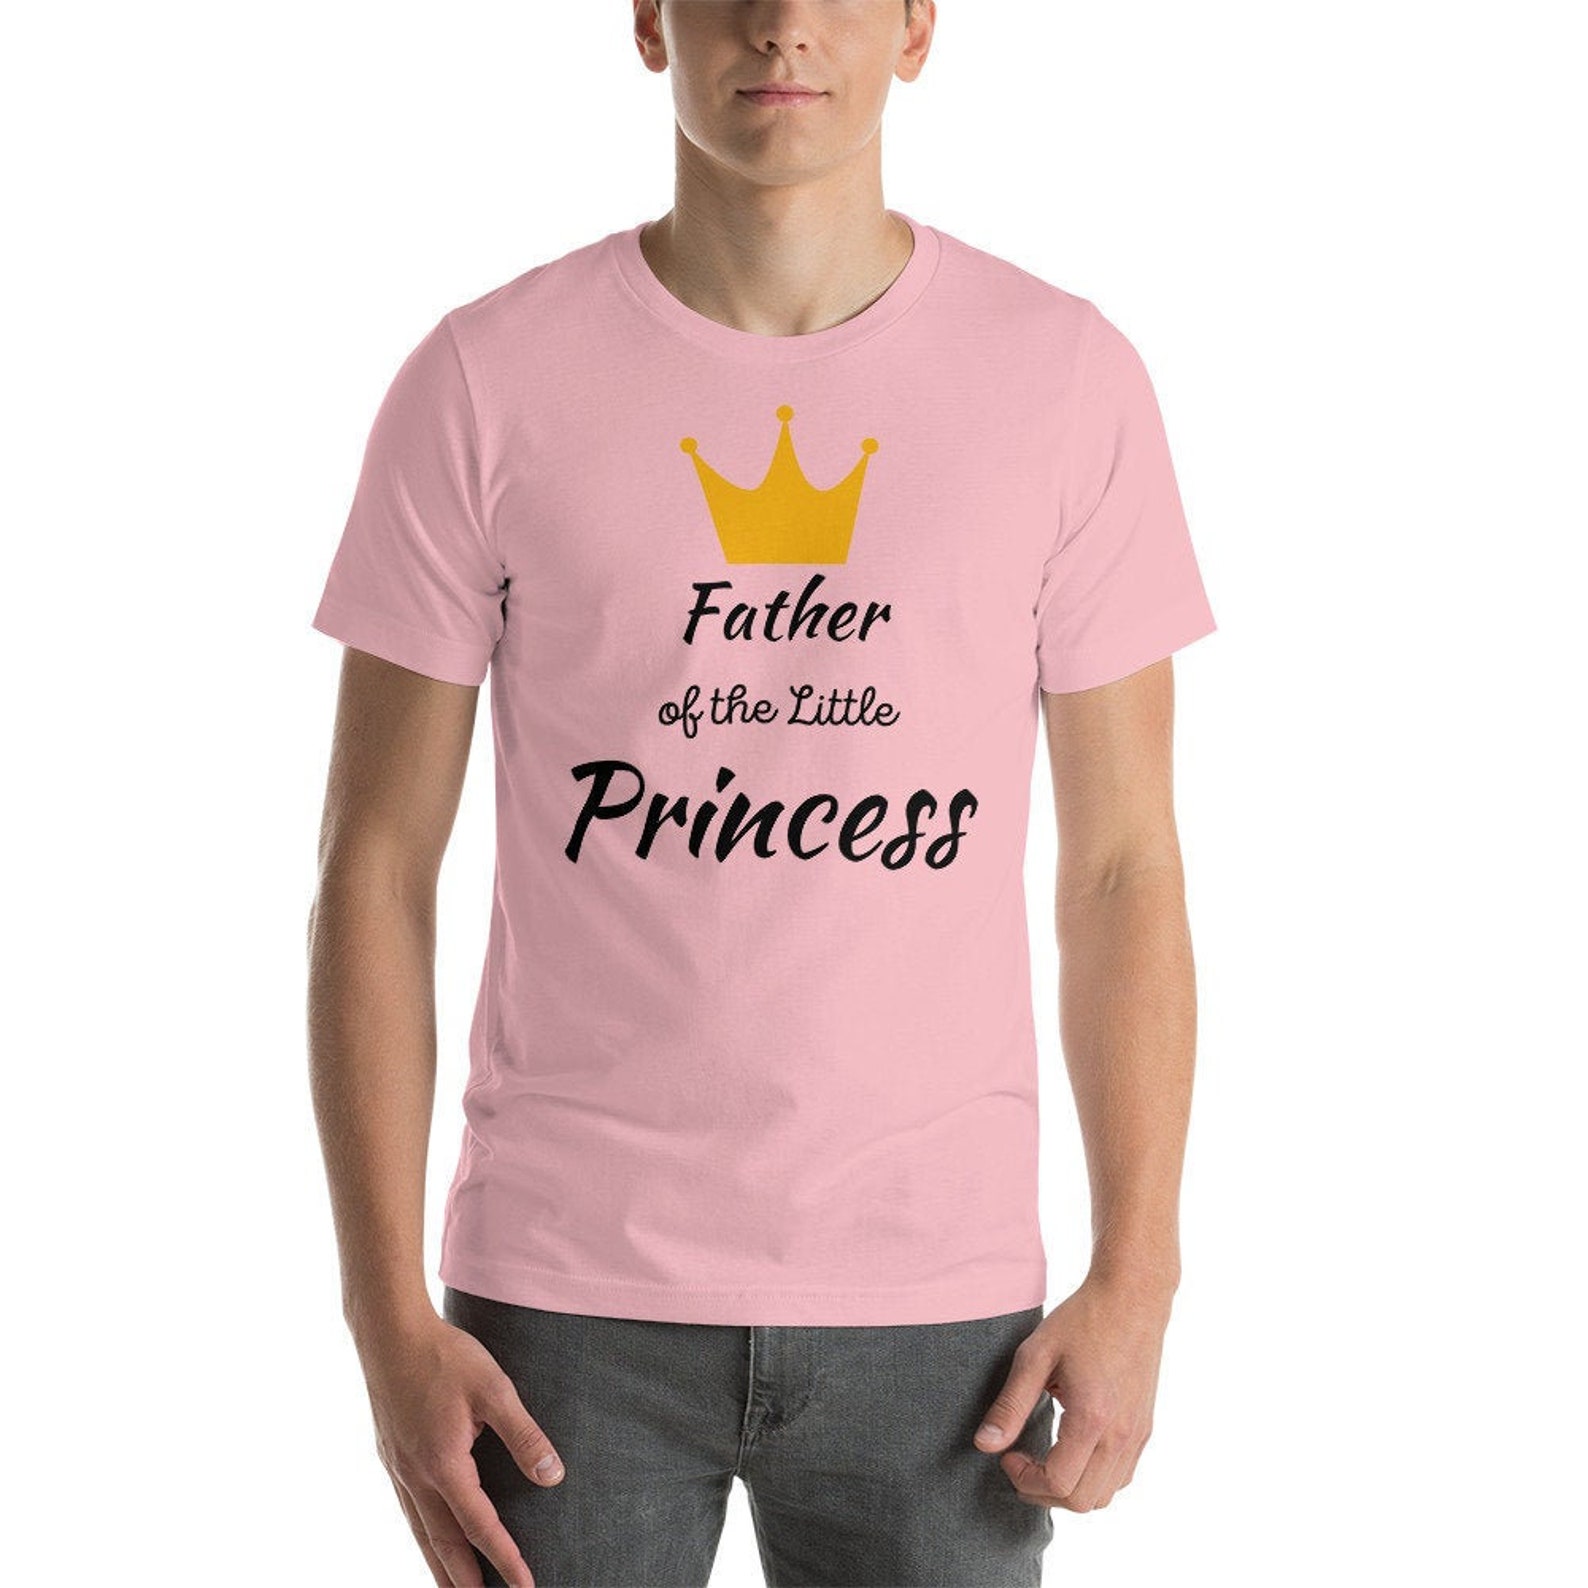 Little Princess tshirts Gender Reveal tshirts baby shower | Etsy